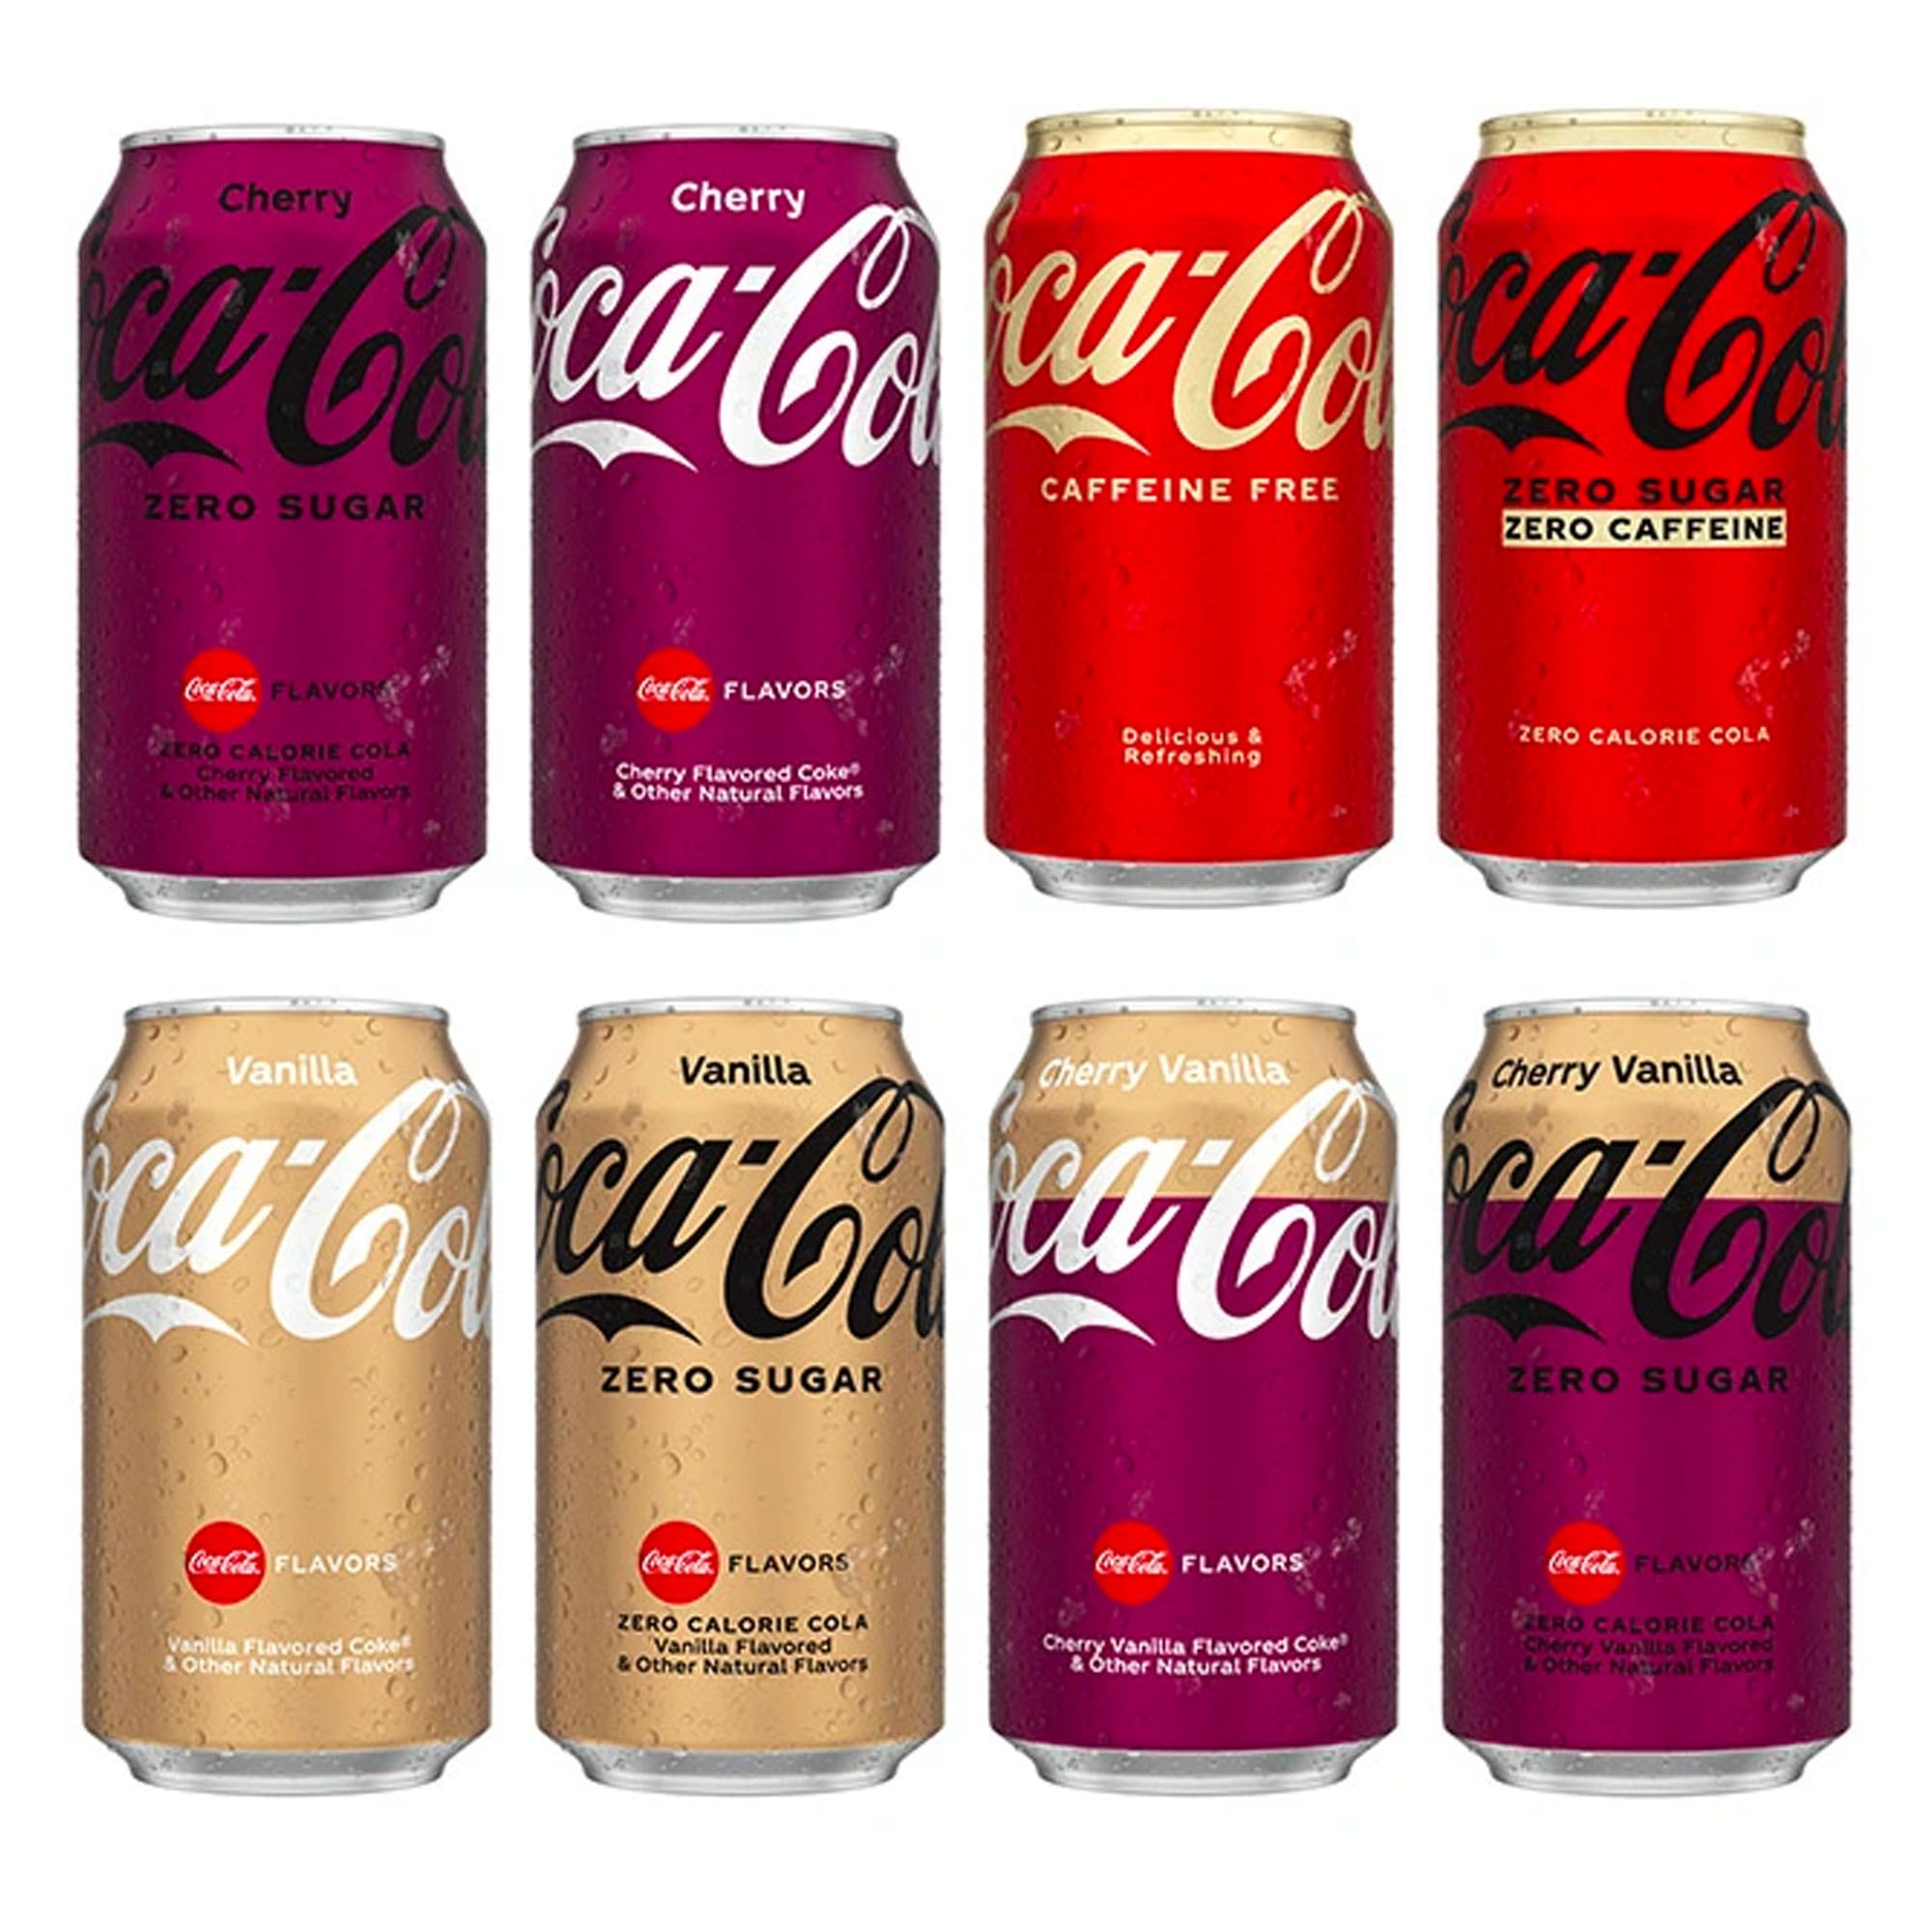 Has Coca Cola lost its branding fizz?